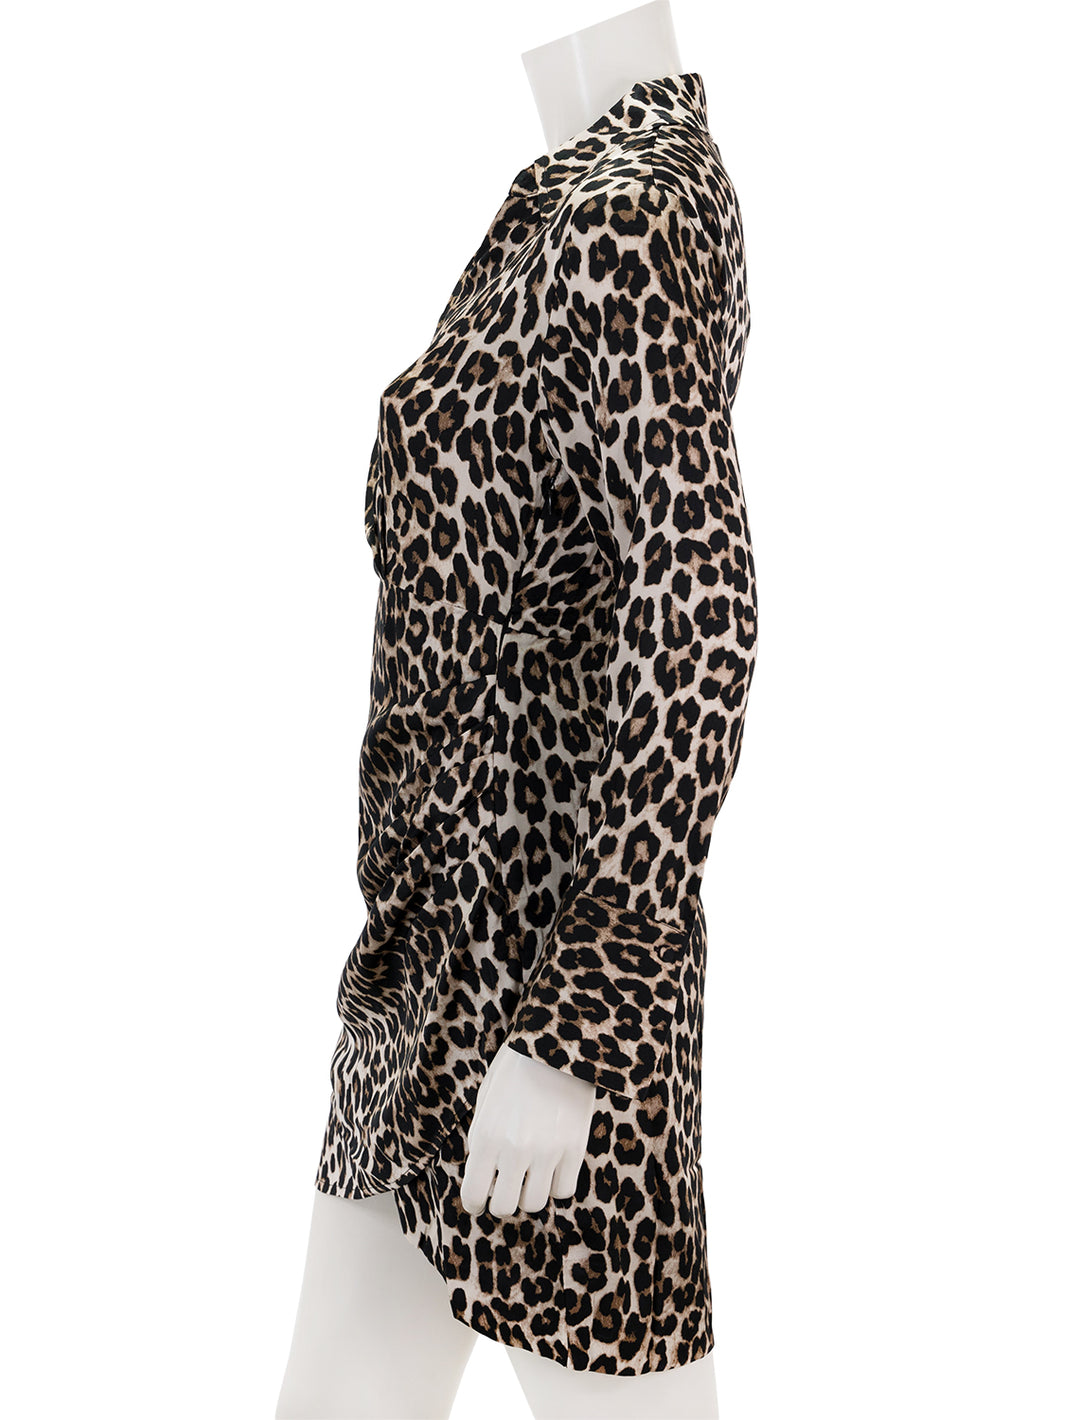 Side view of Suncoo Paris' chirley dress in beige cheetah.